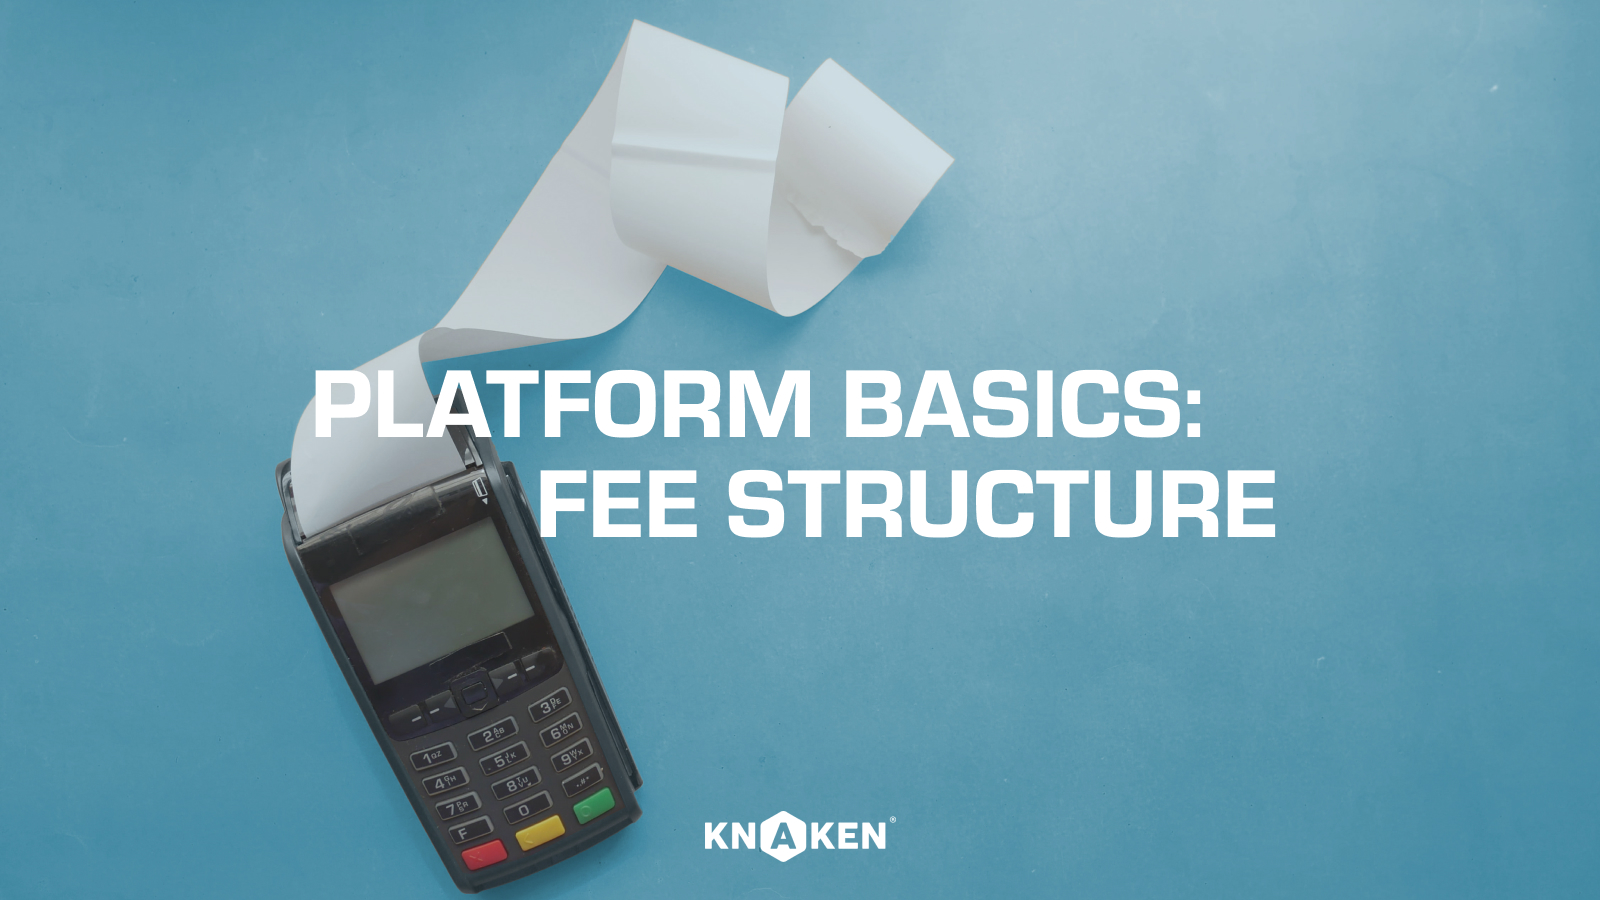 Platform basics: fee overview